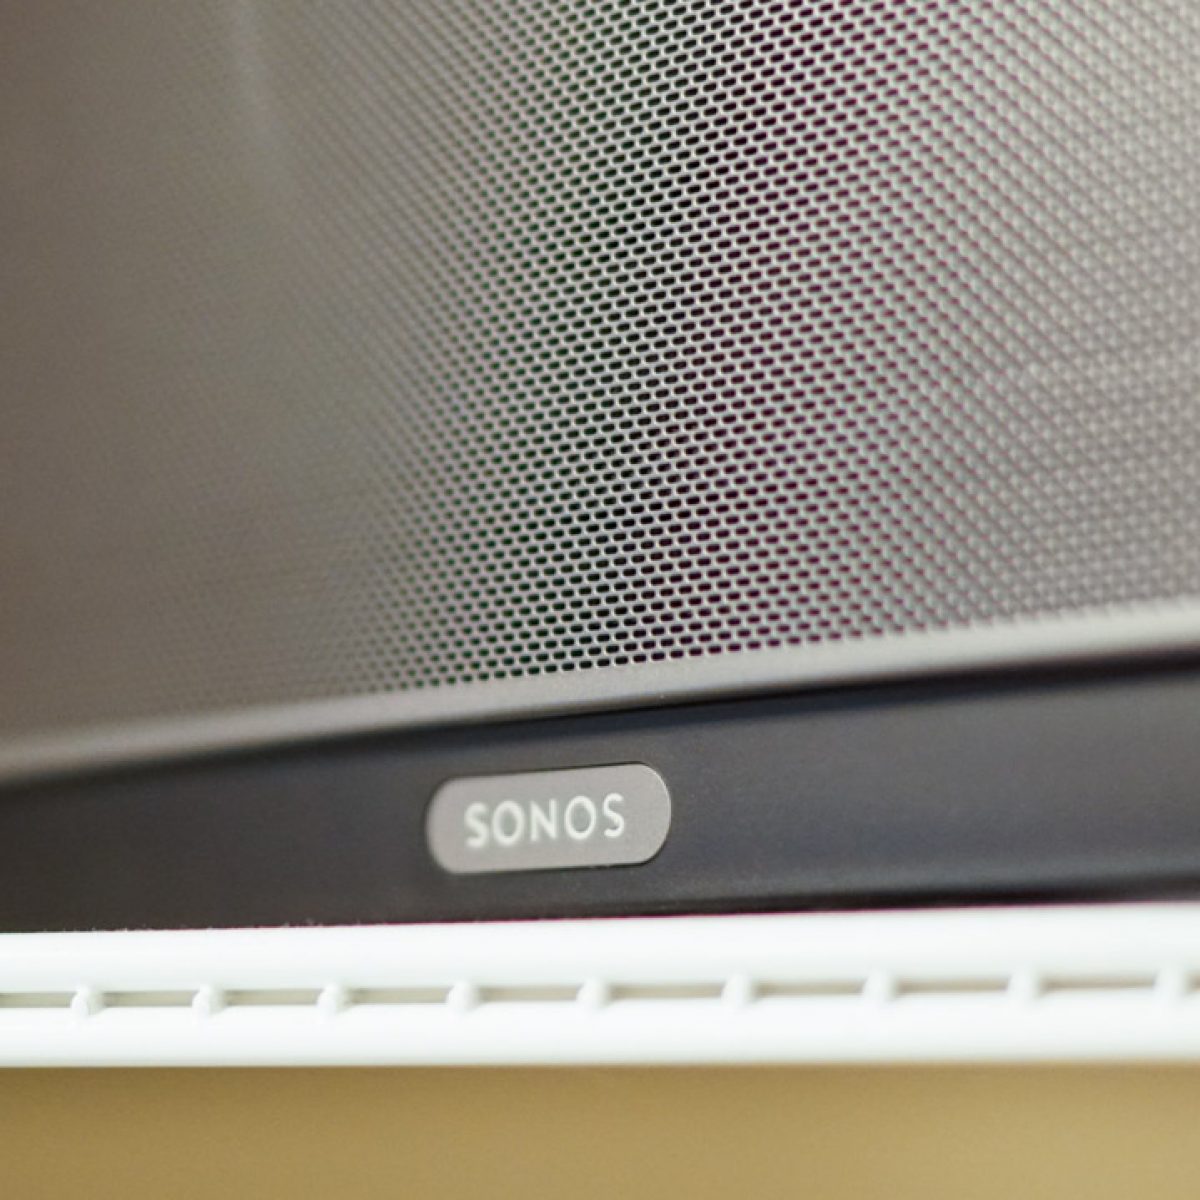 Flere Fortæl mig Arne Sonos Killing Older Speakers is Exactly Why We Need a New Chromecast Audio